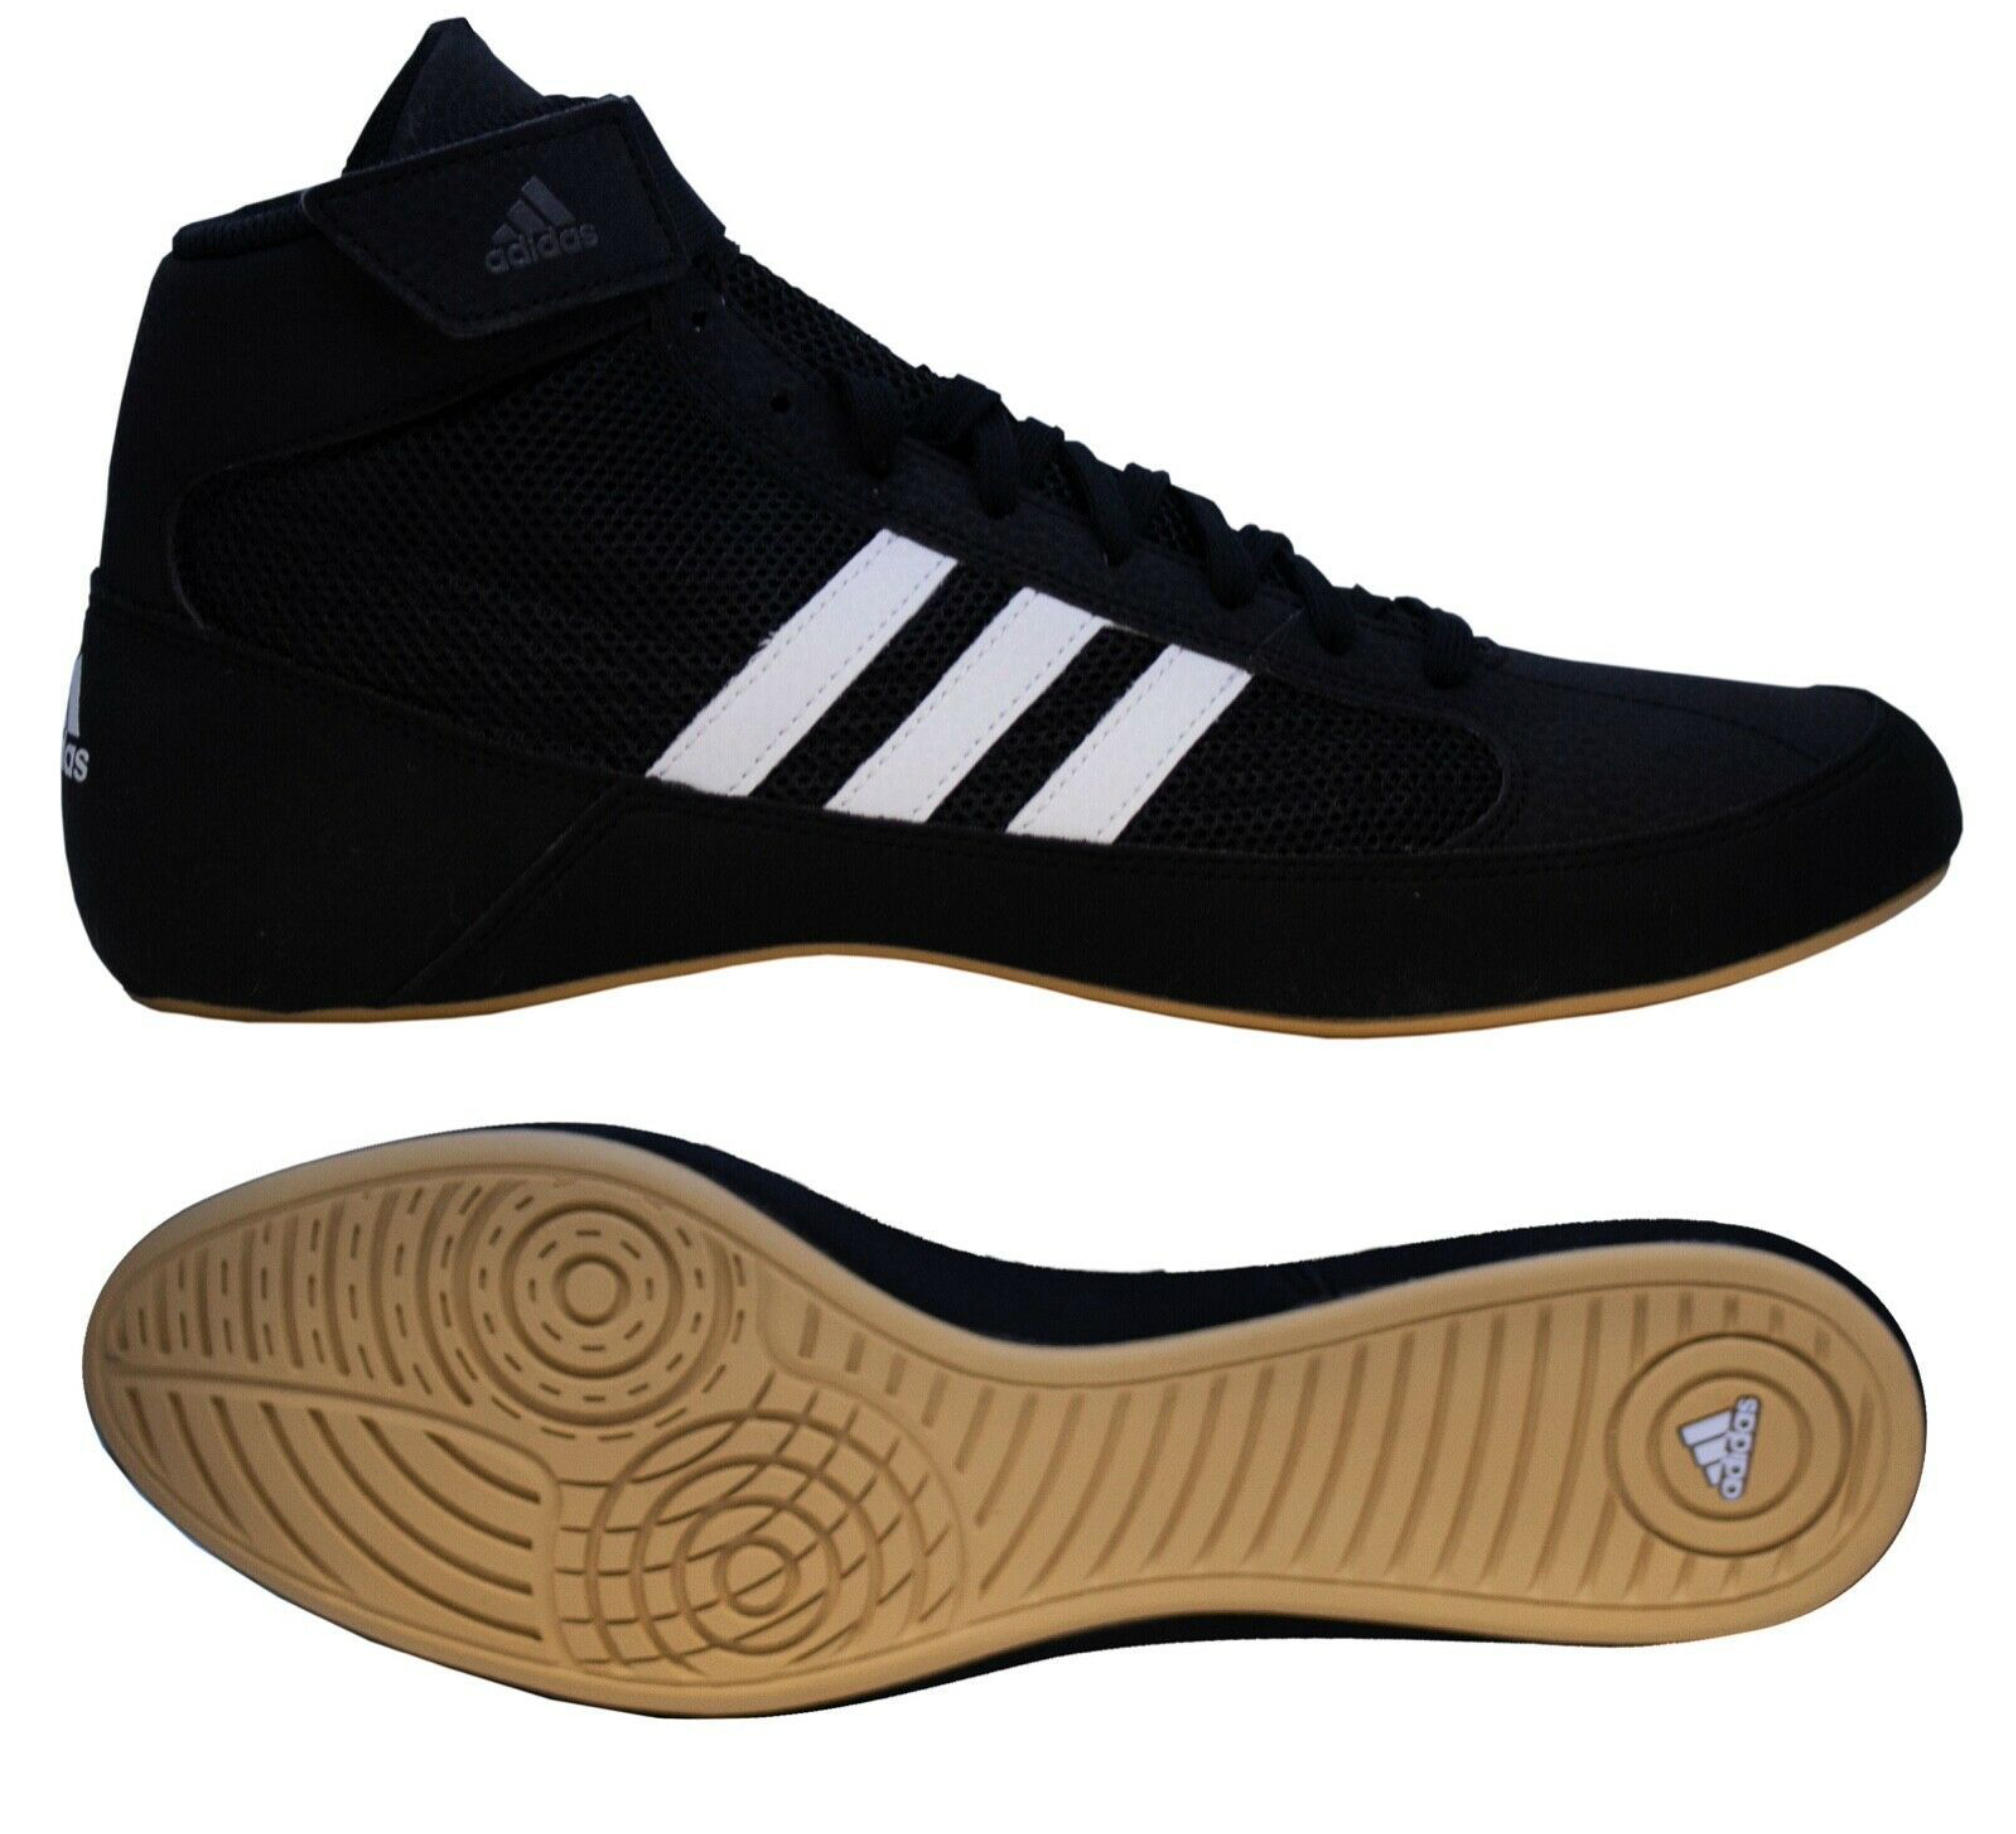 Adidas | AQ3325 | 2 | Black | Adult & Youth | Wrestling Shoes Call Athletics